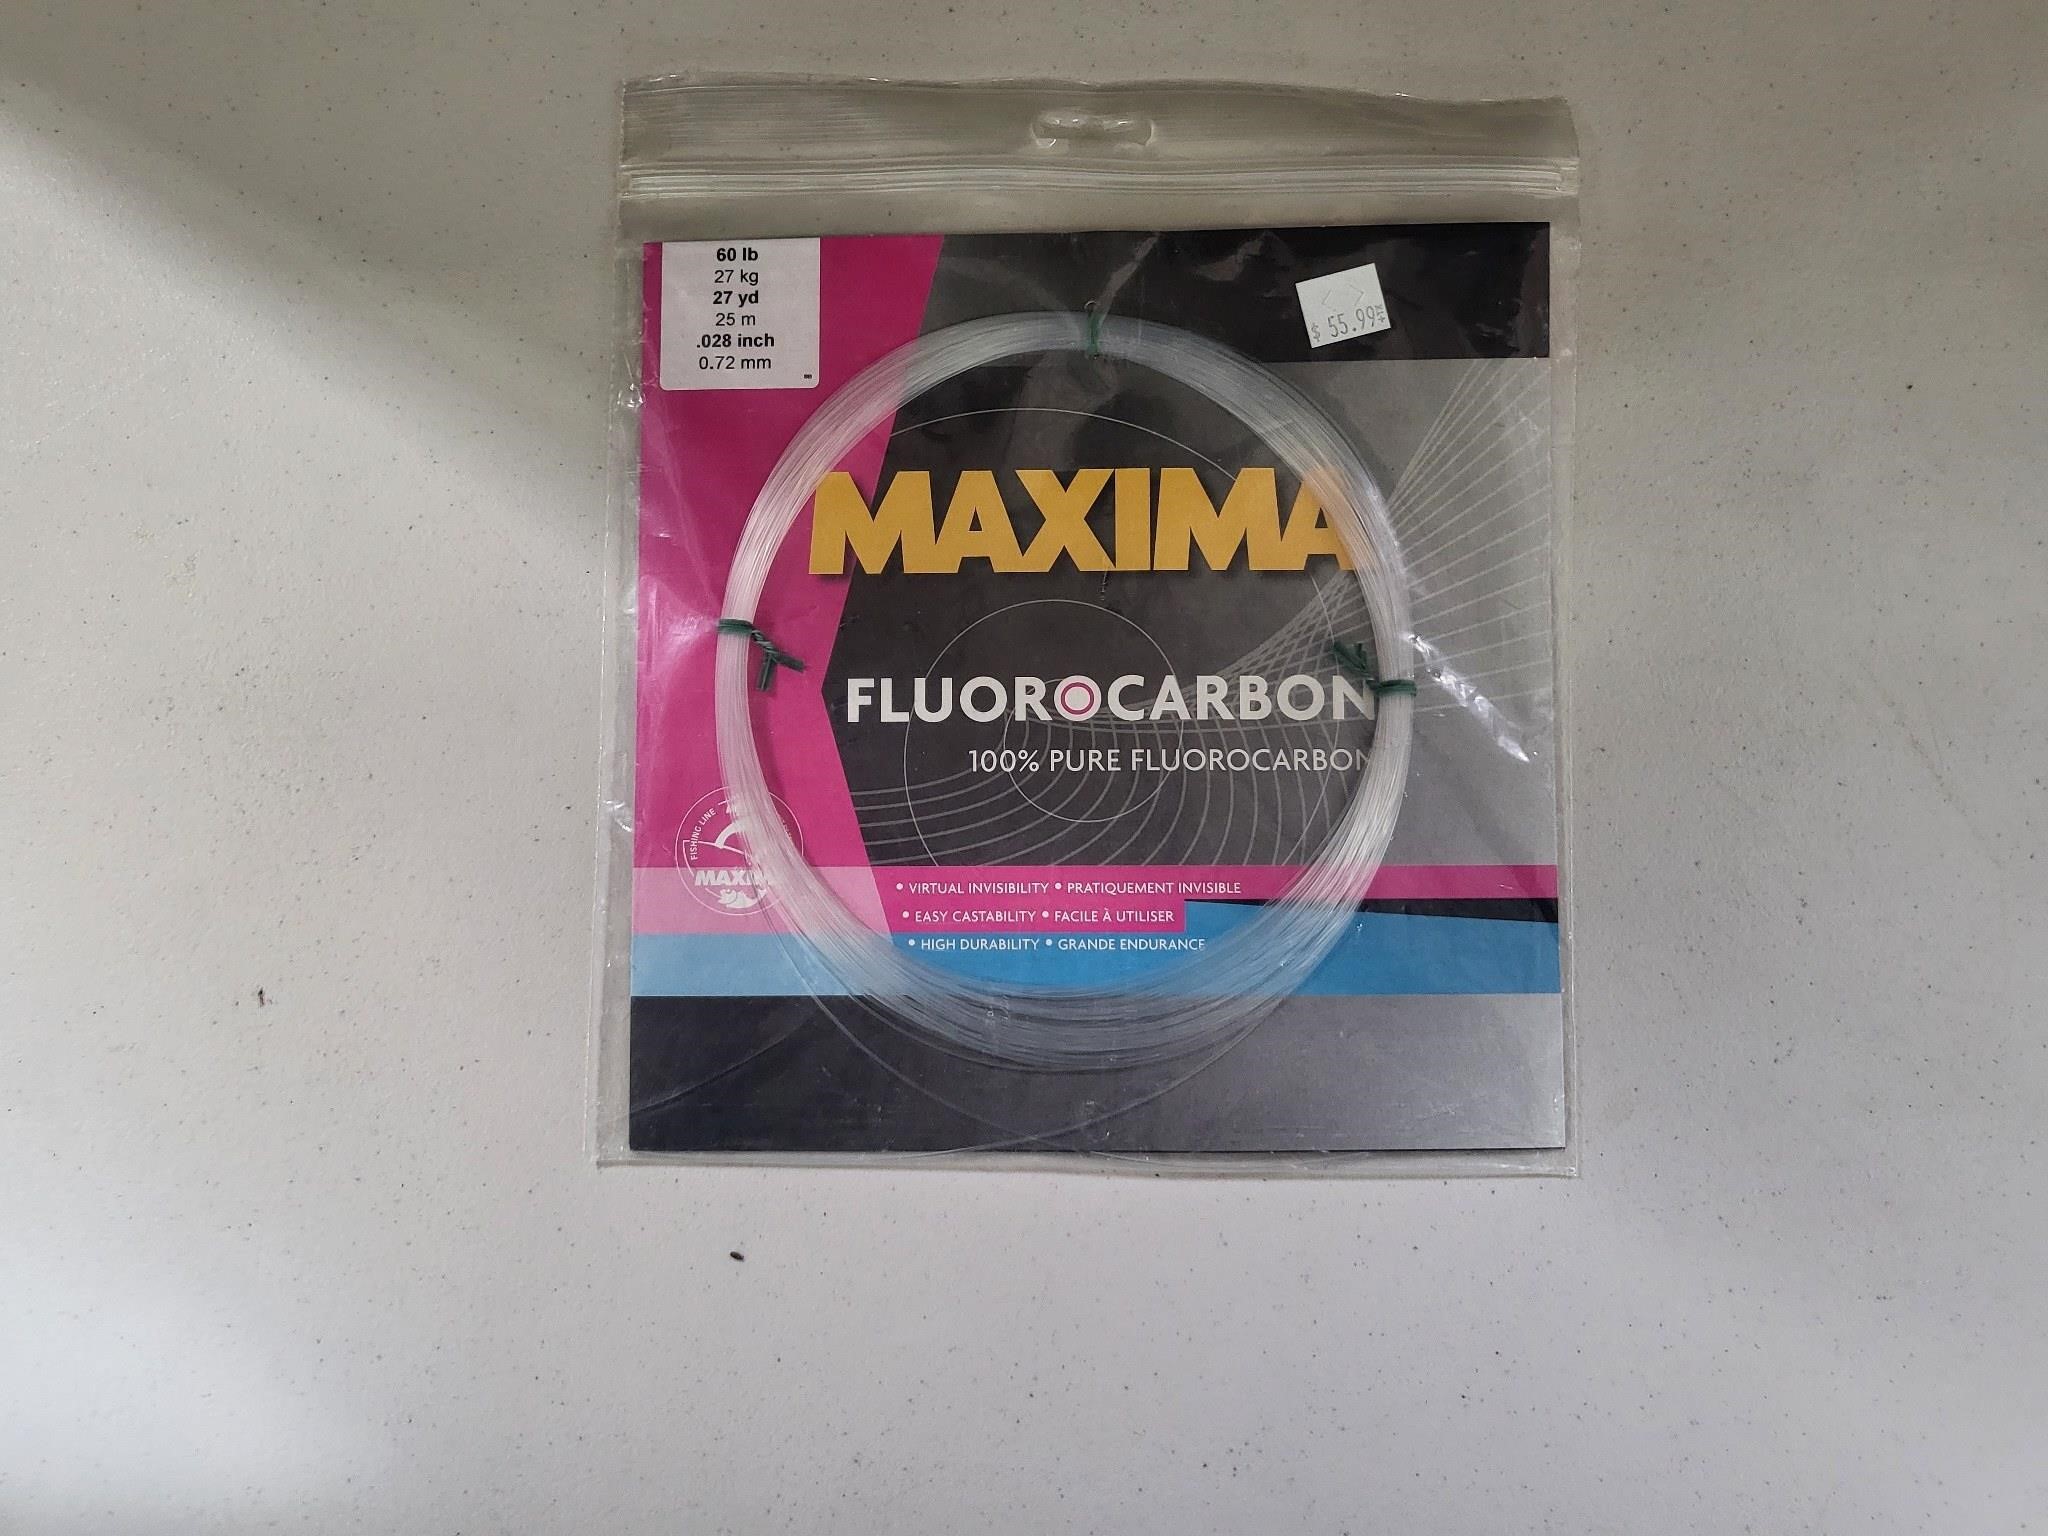 Maxima - Fluoro Carbon, 60 lbs, 27 yards, 0.28"